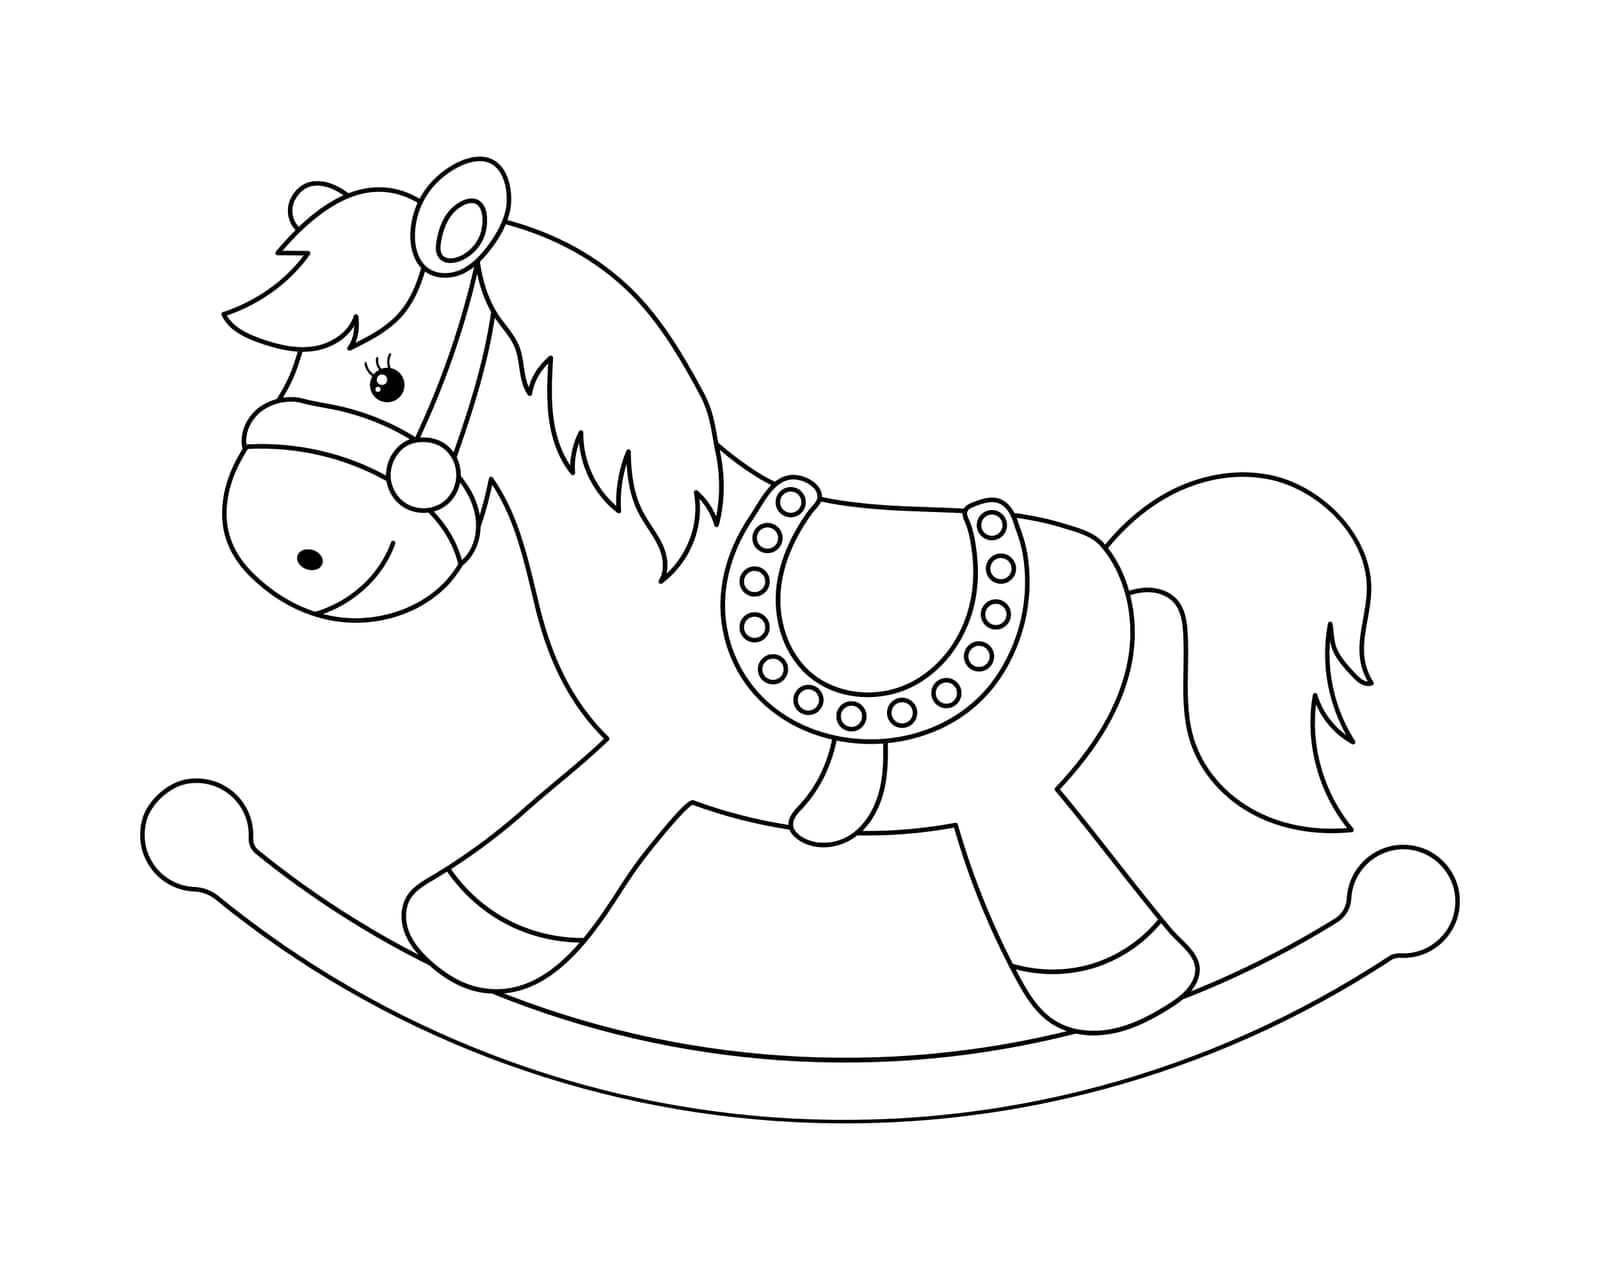 Rocking horse, children's toy. Outline drawing for children's coloring book, sketch. Illustration, vector